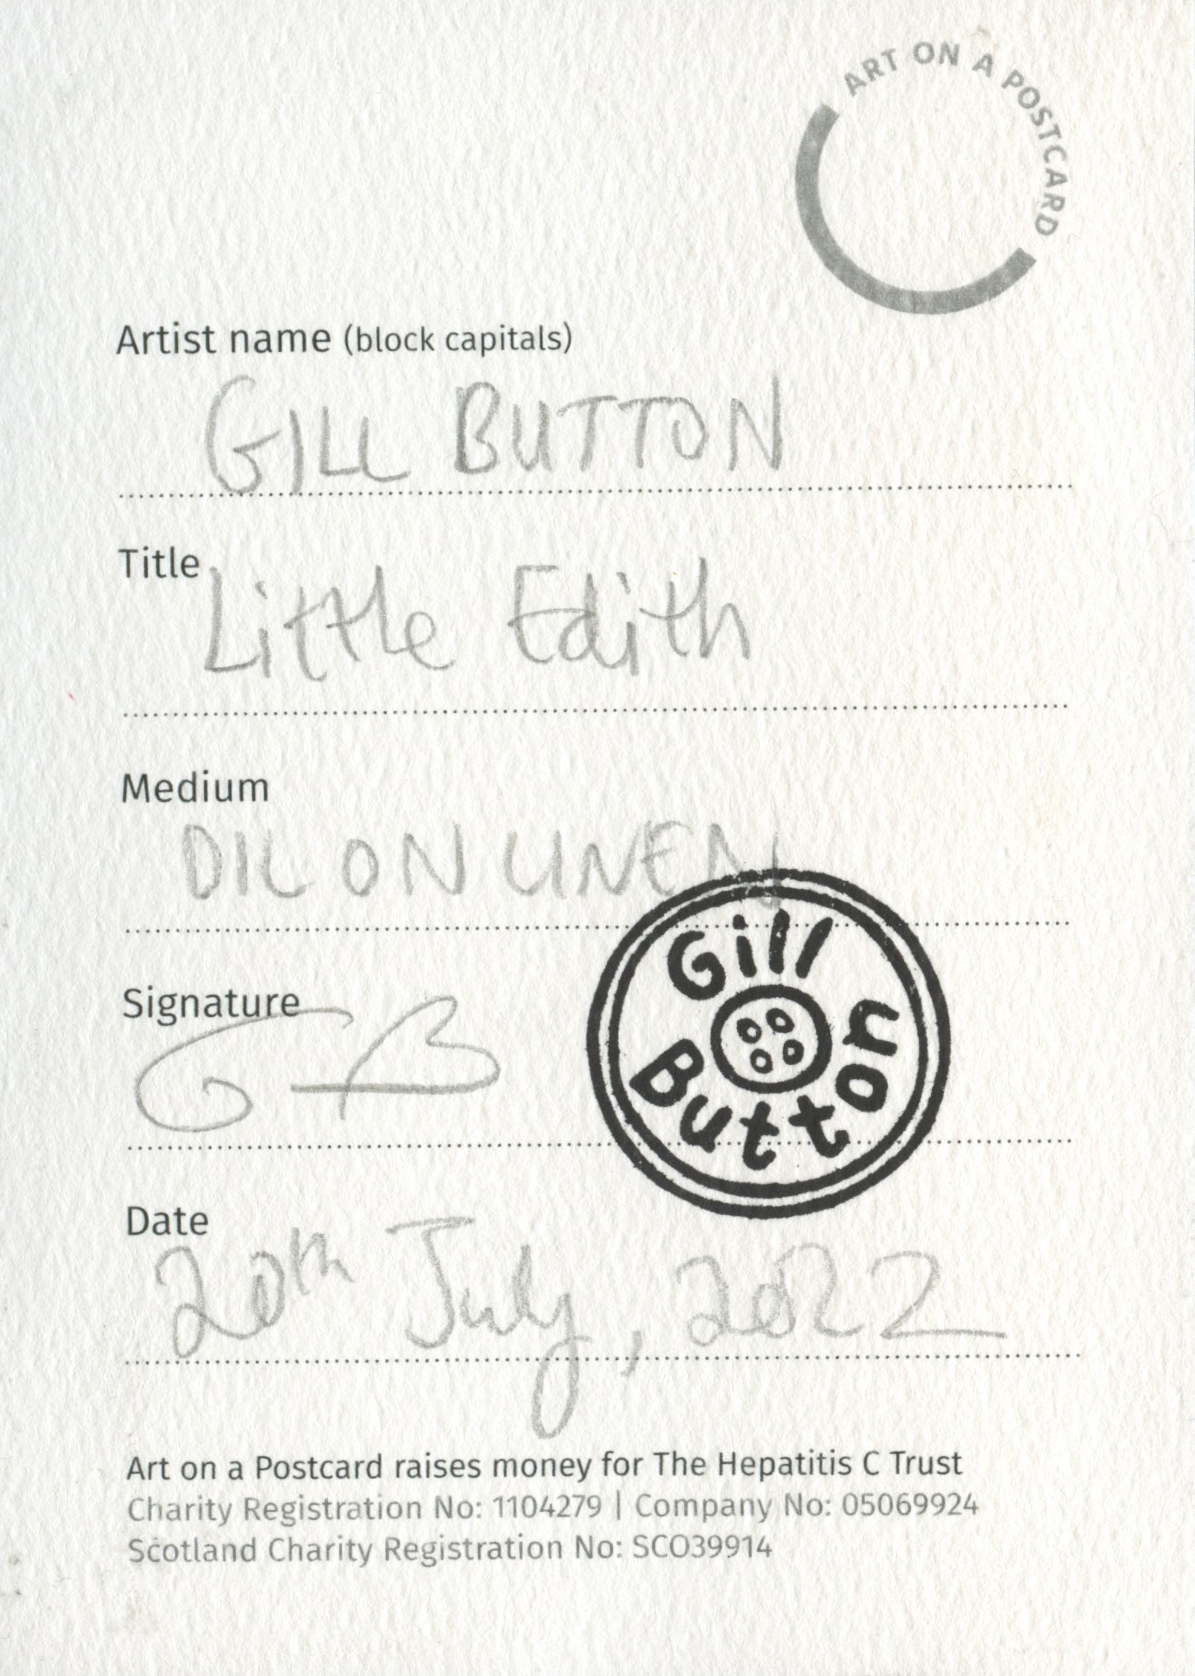 43. Gill Button - Little Edith - BACK